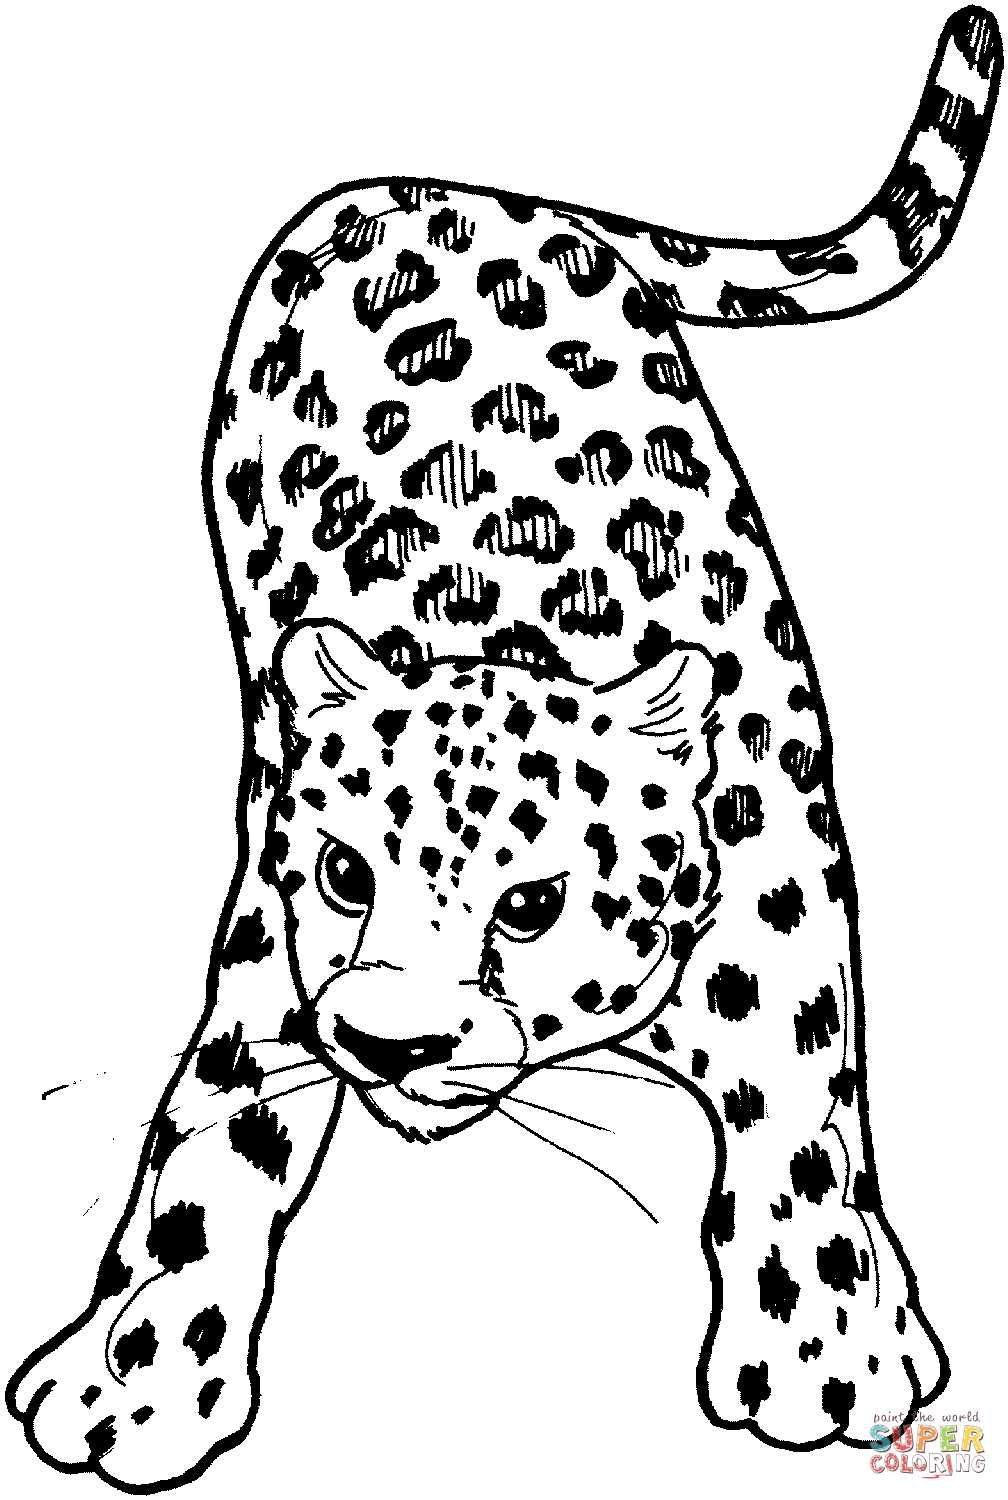 Amur Leopard clipart #12, Download drawings